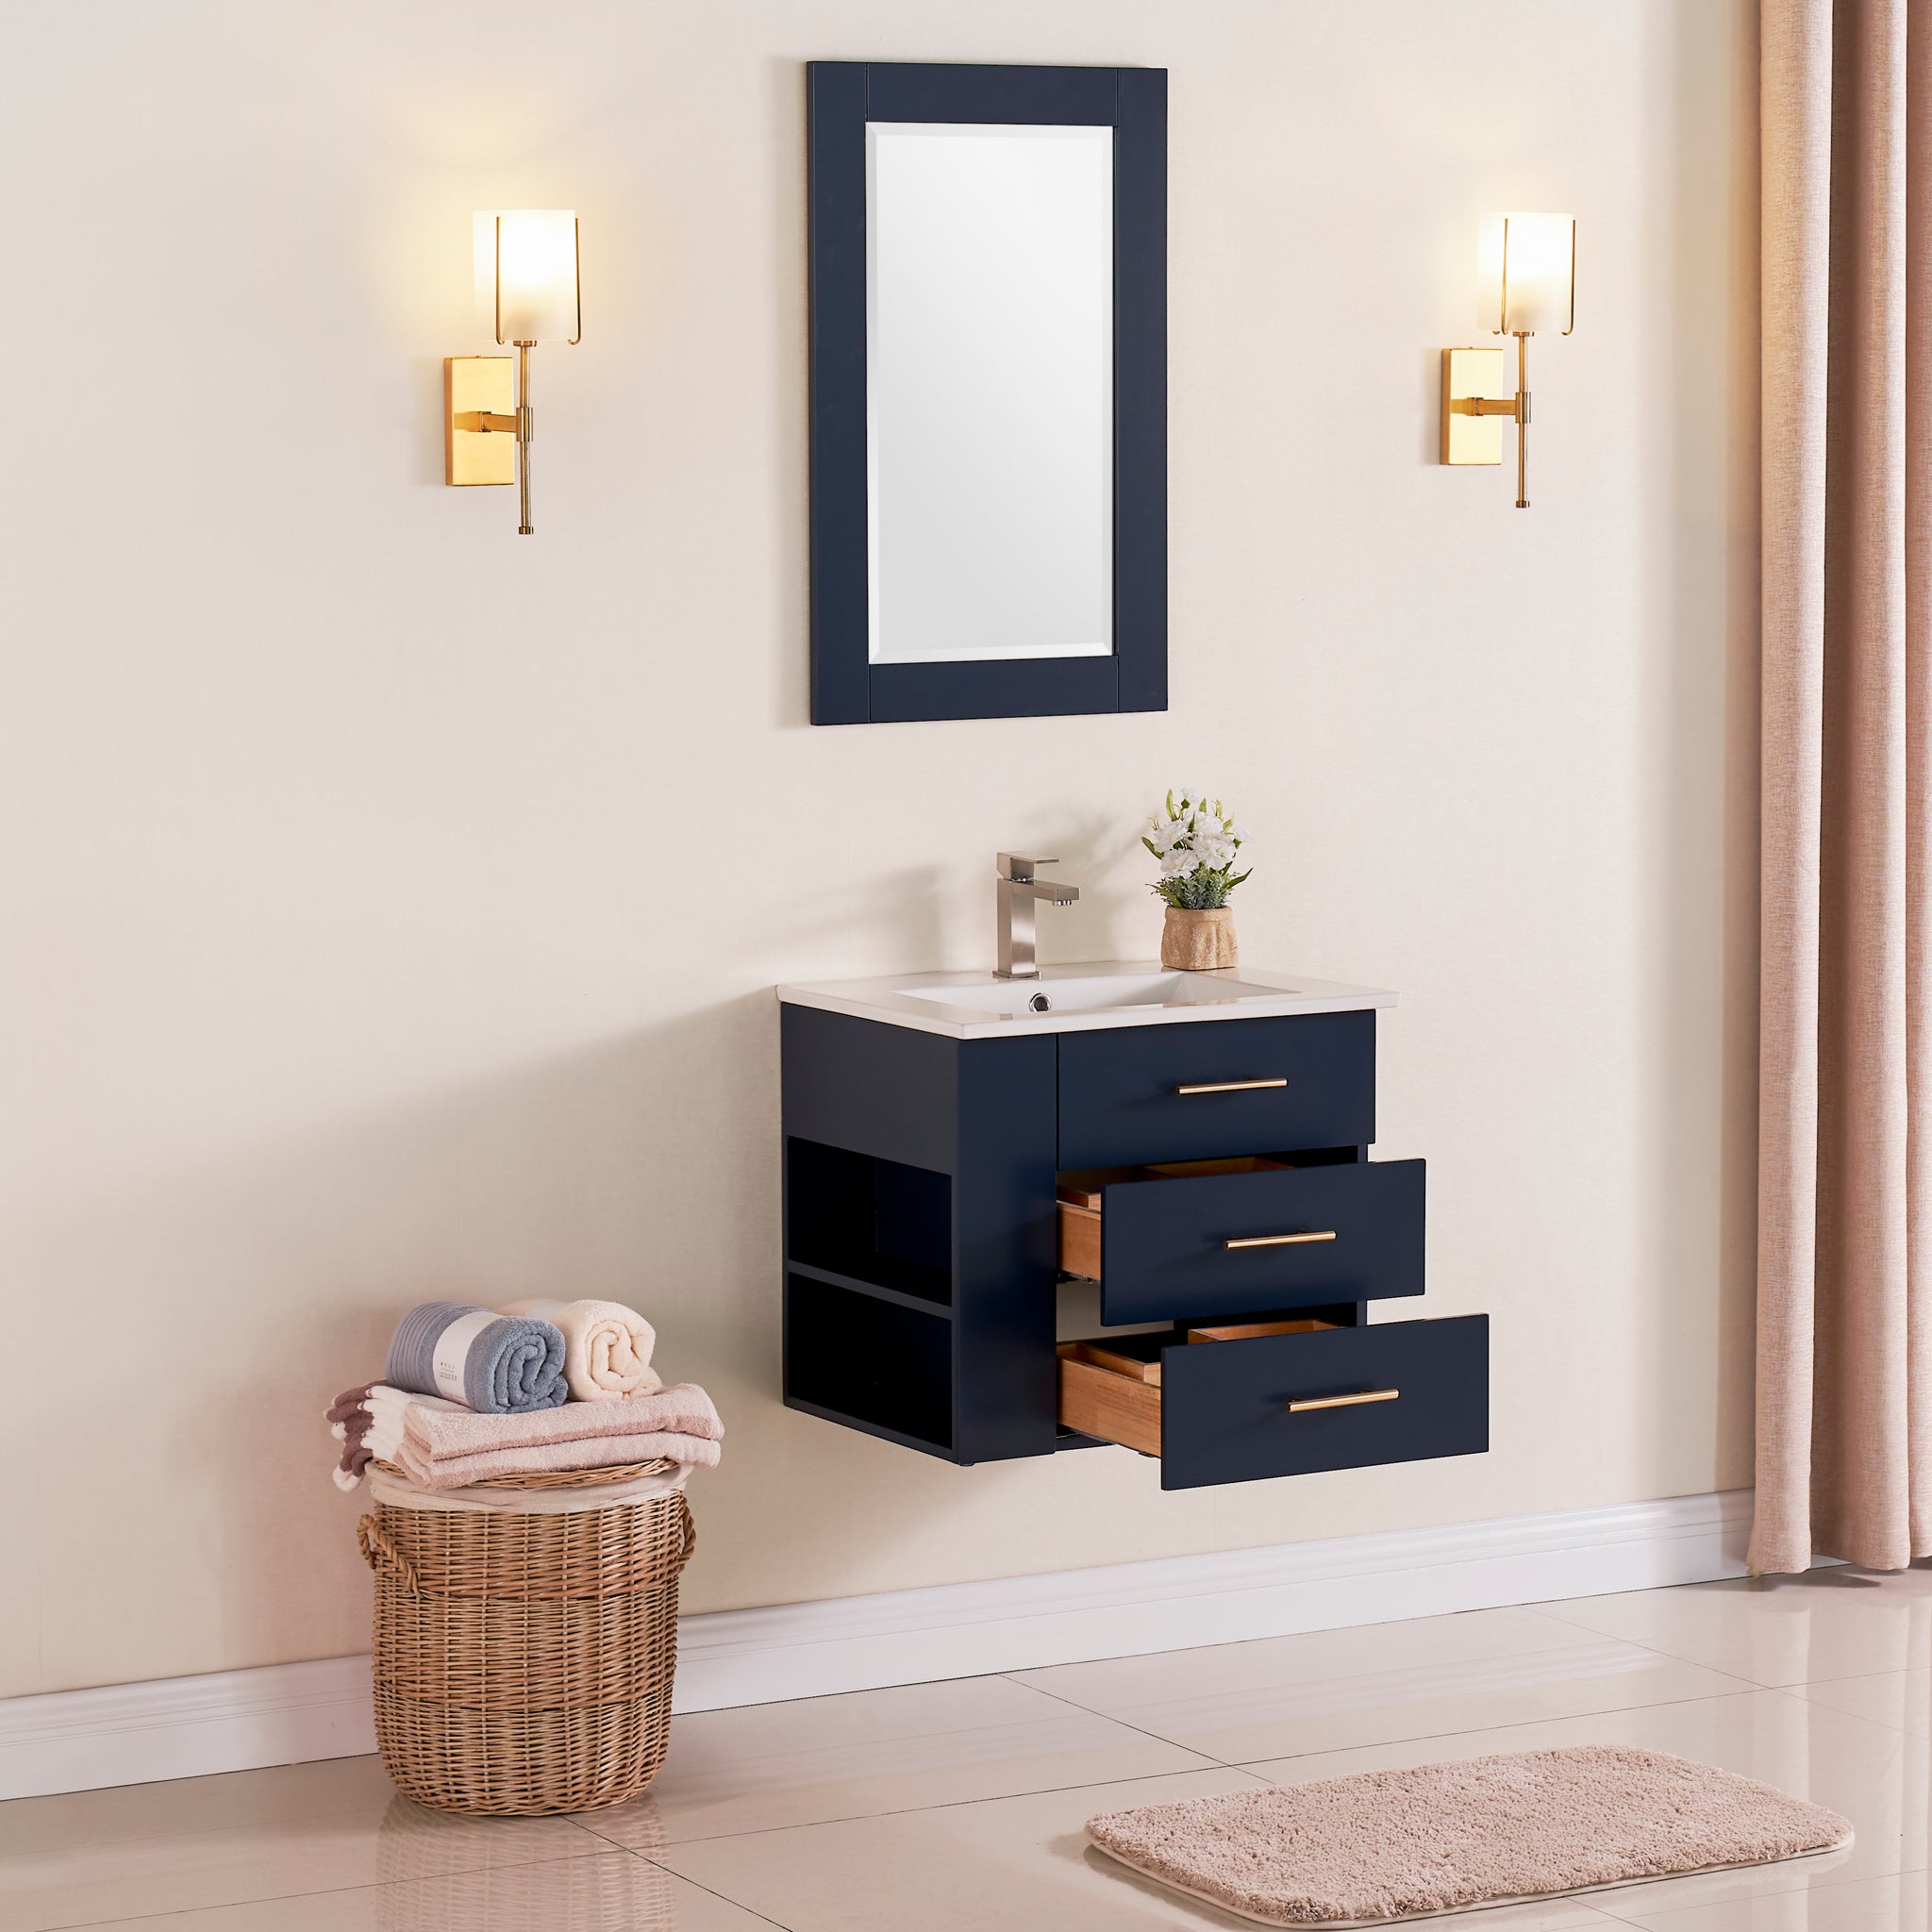 Wood Vanity With Optional Shelf for Basin Sink Wall Mounted